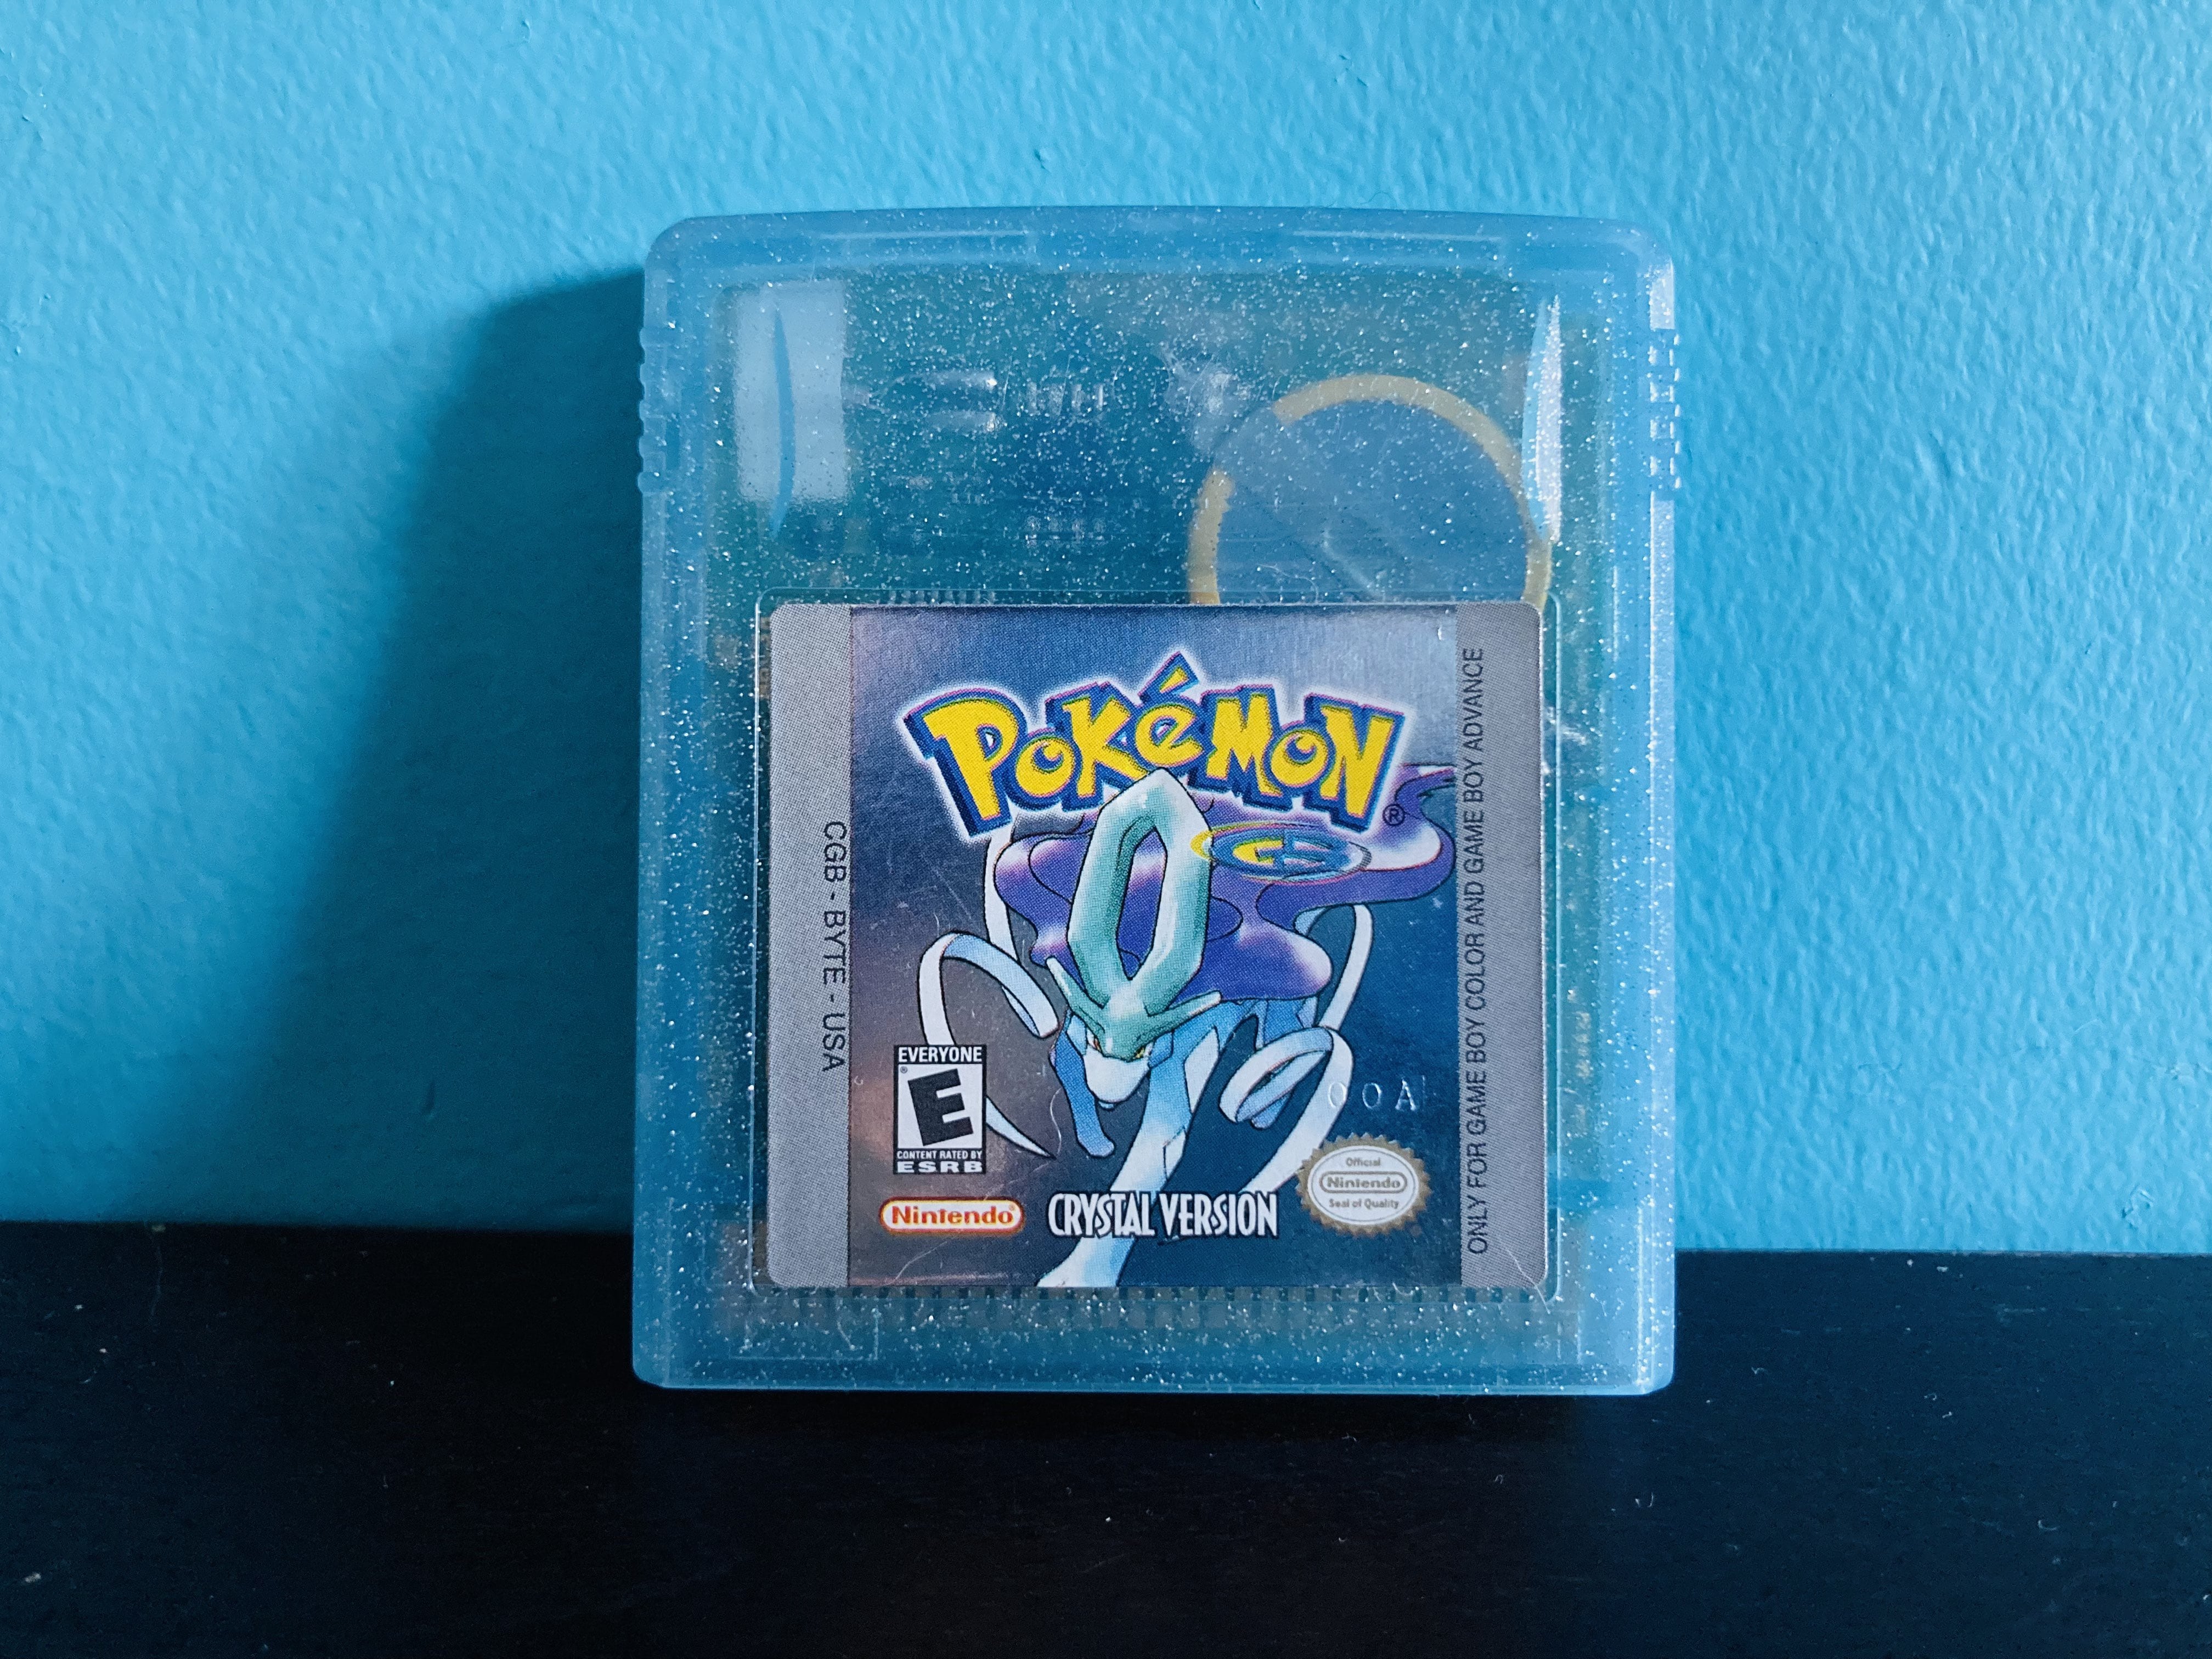 Pokémon Crystal cartridge